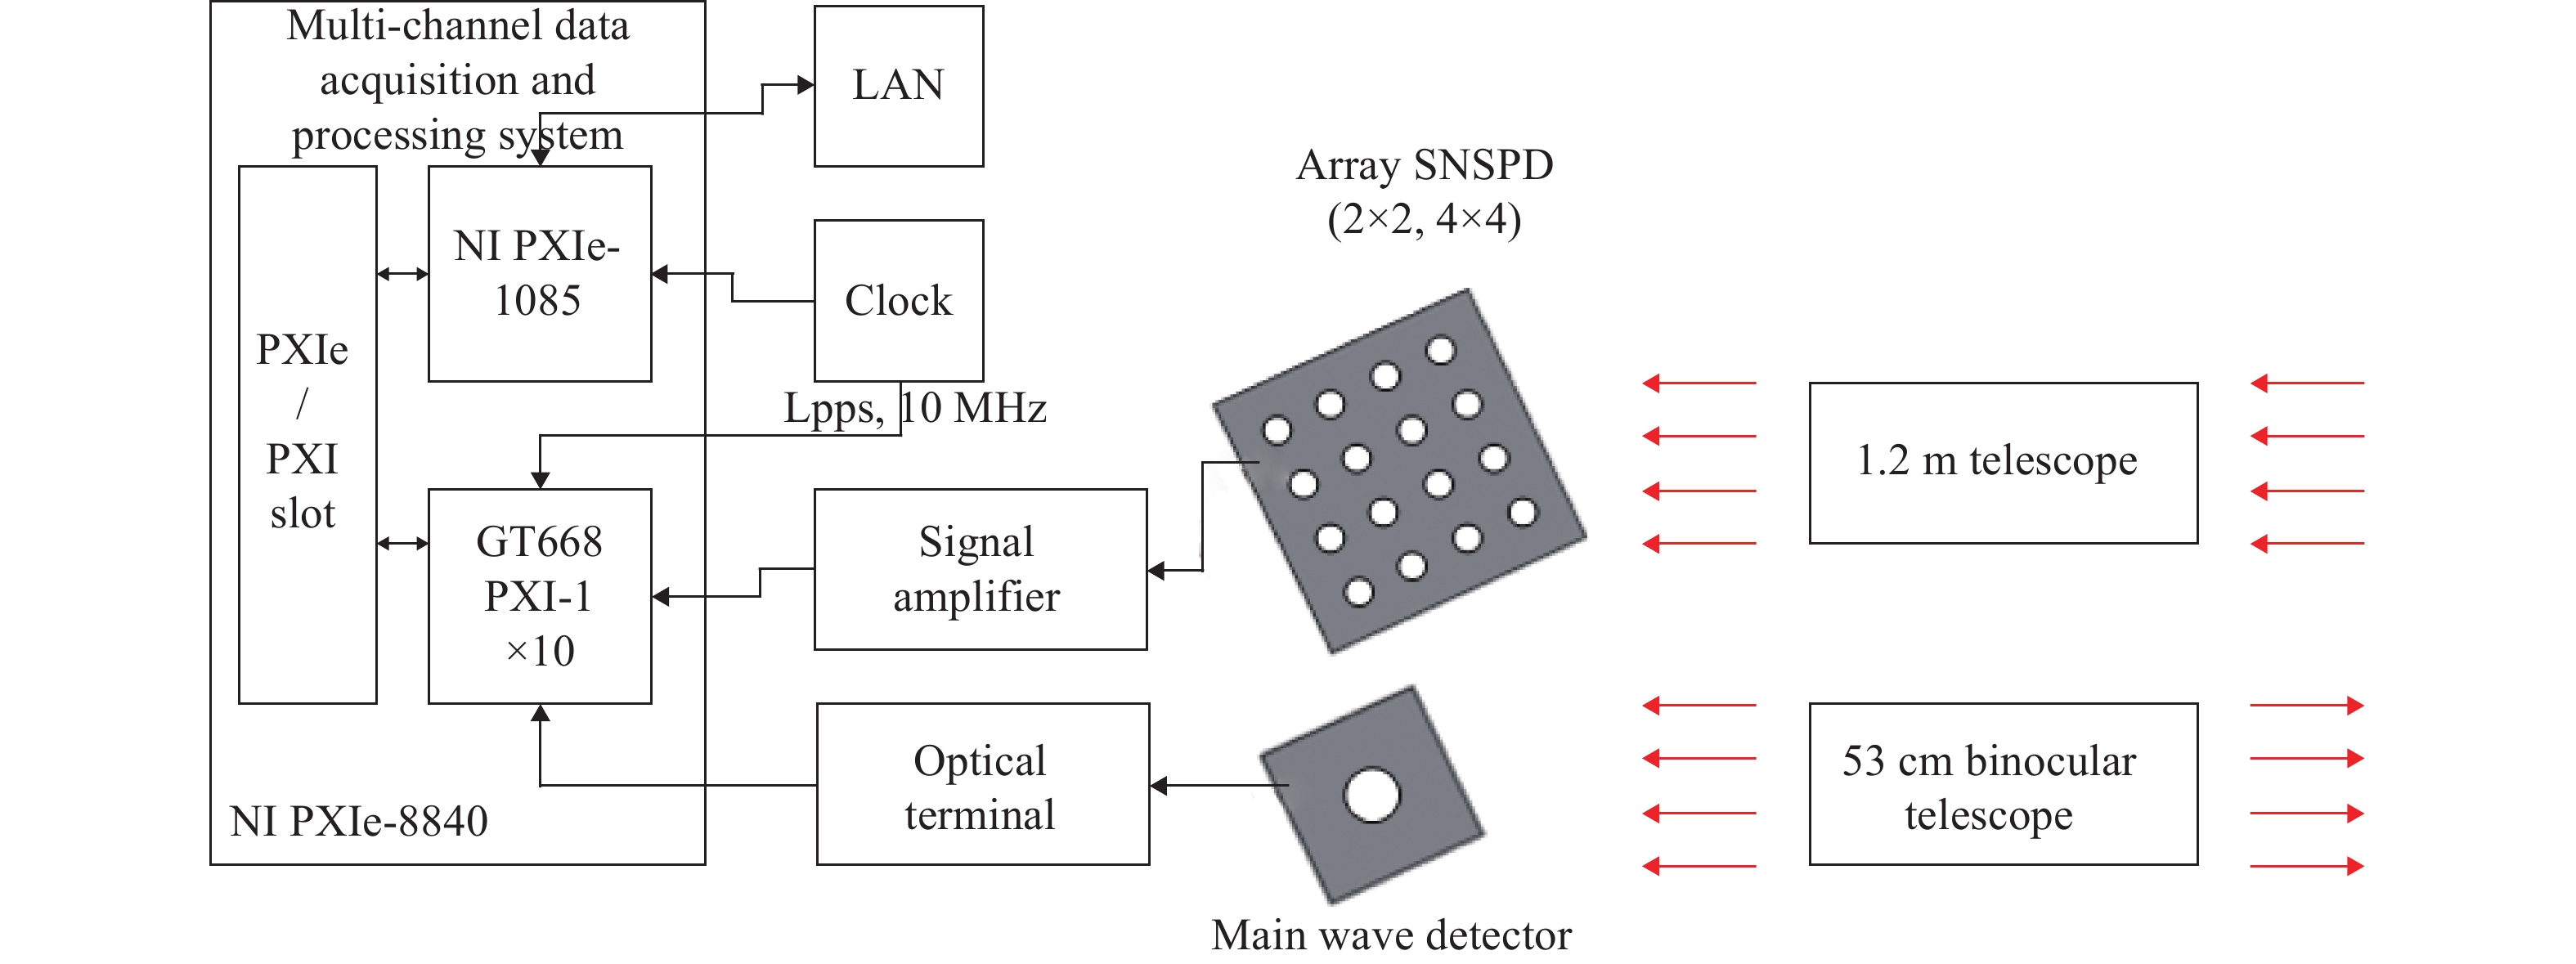 Diagram of laser ranging system based on array detection